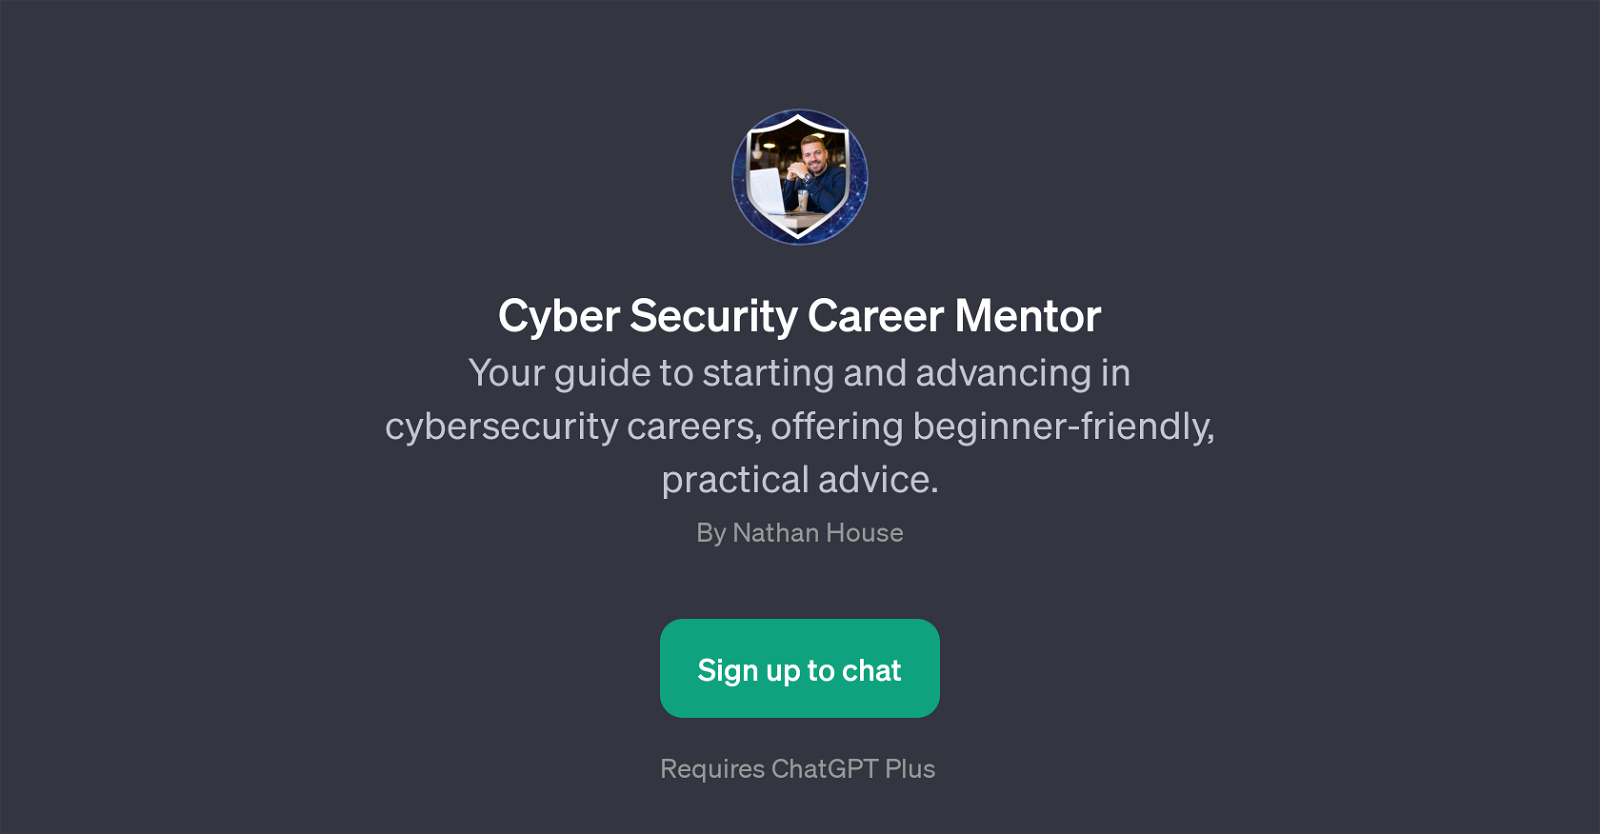 Cyber Security Career Mentor website